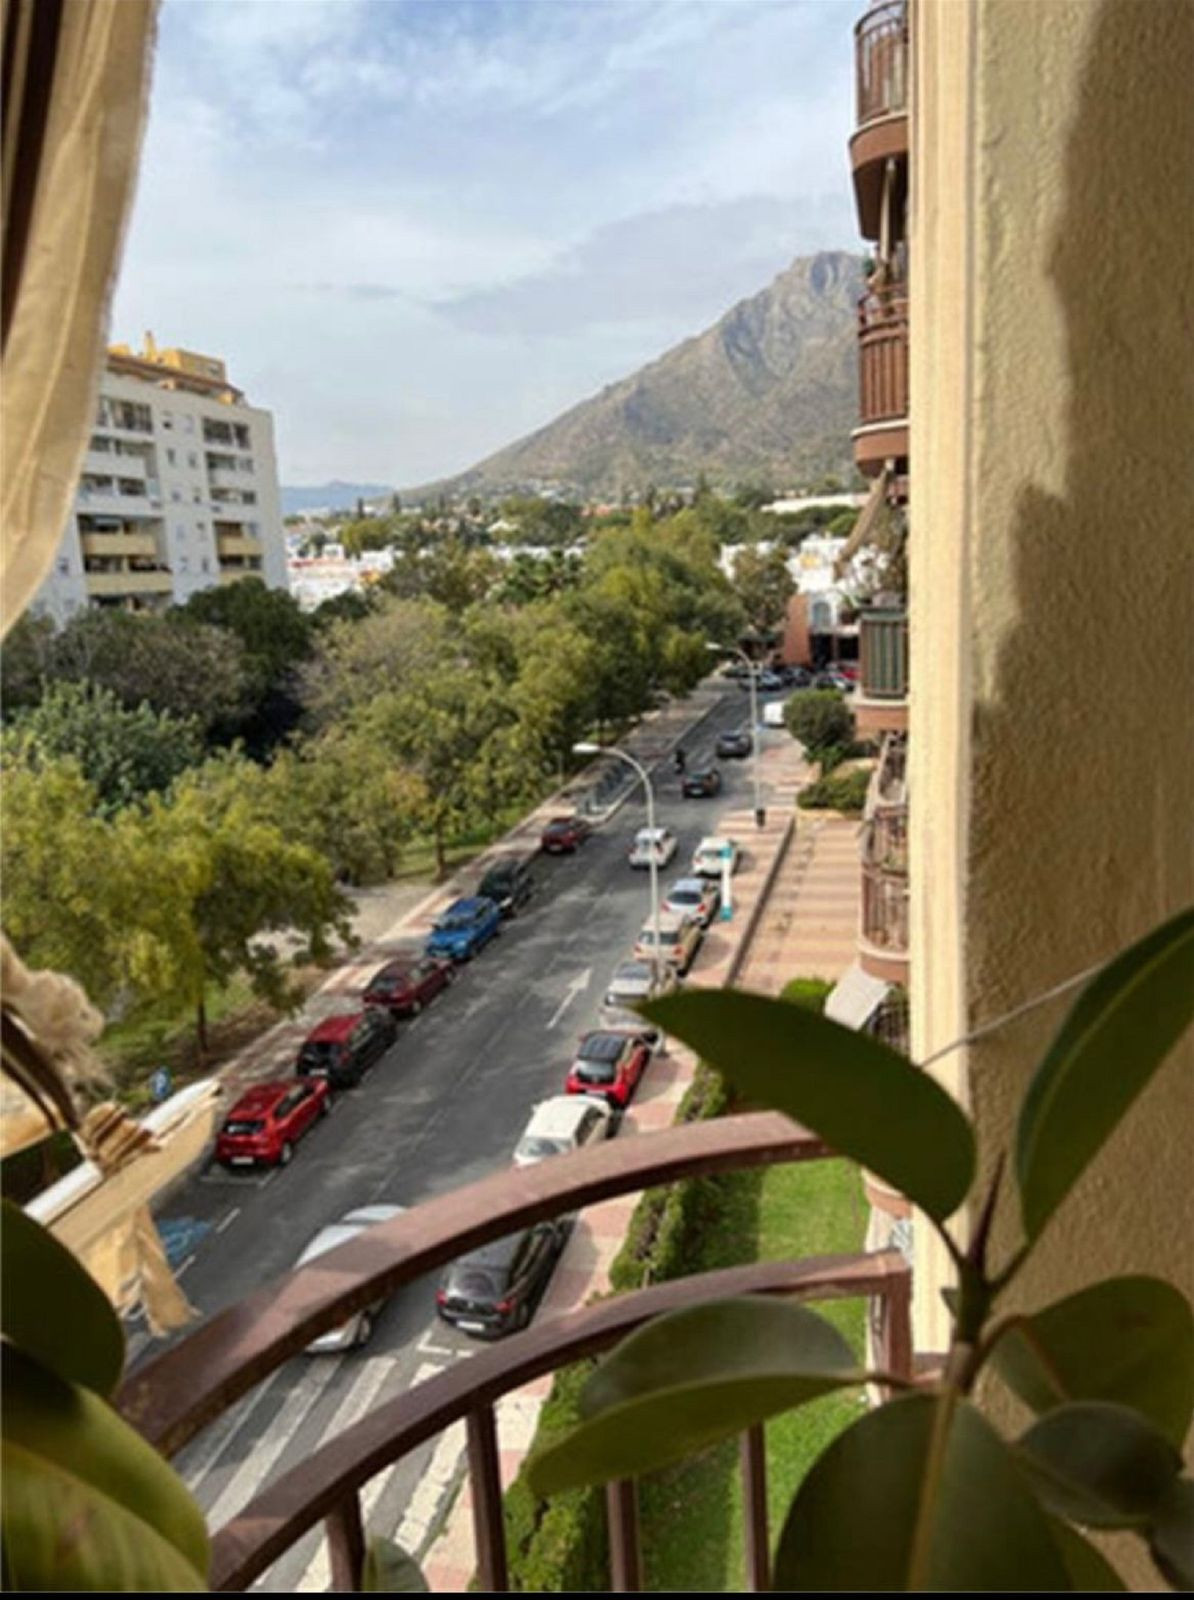 West facing 4 bed 2 bath top floor apartment with open views. Located in the Miraflores neighborhood, Spain